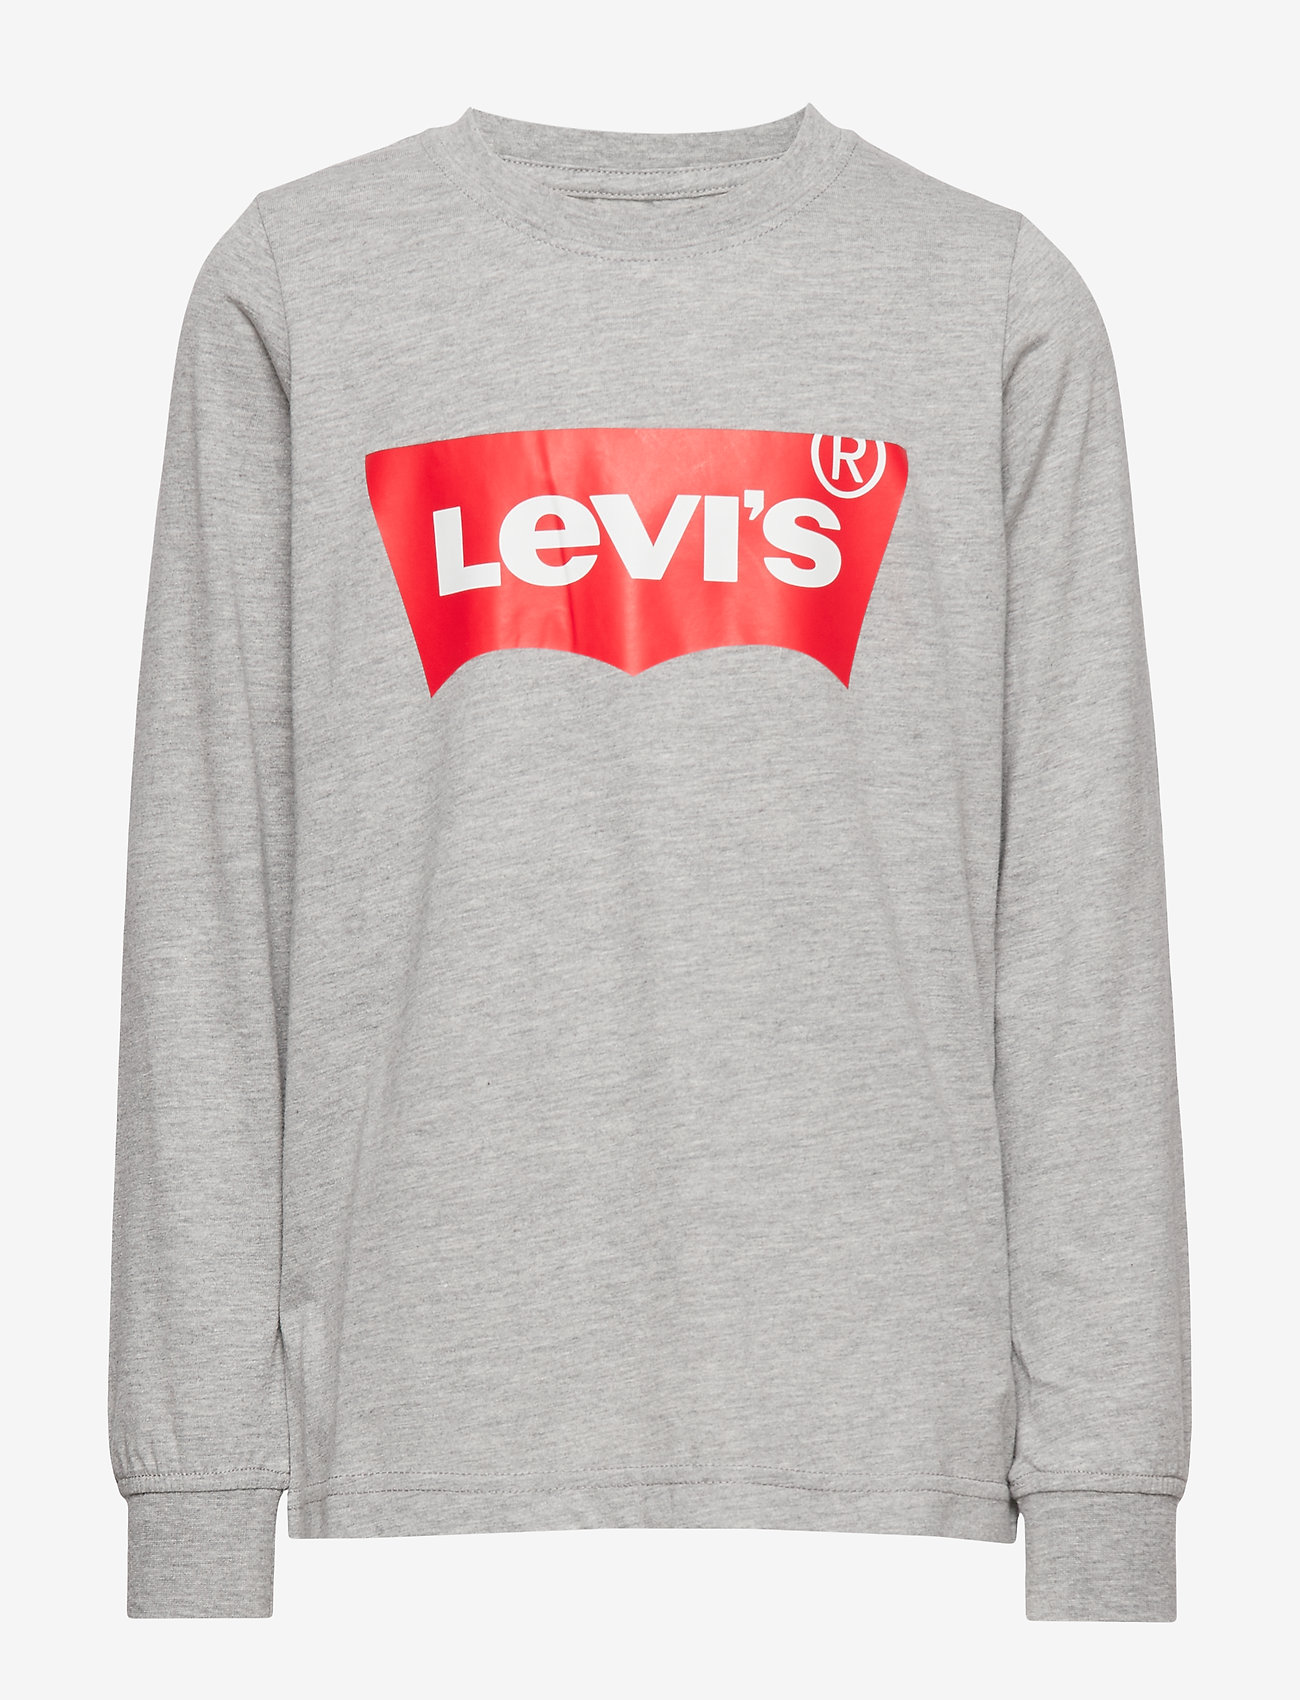 Levi's - Levi's® Long Sleeve Batwing Tee - long-sleeved t-shirts - peche - 0